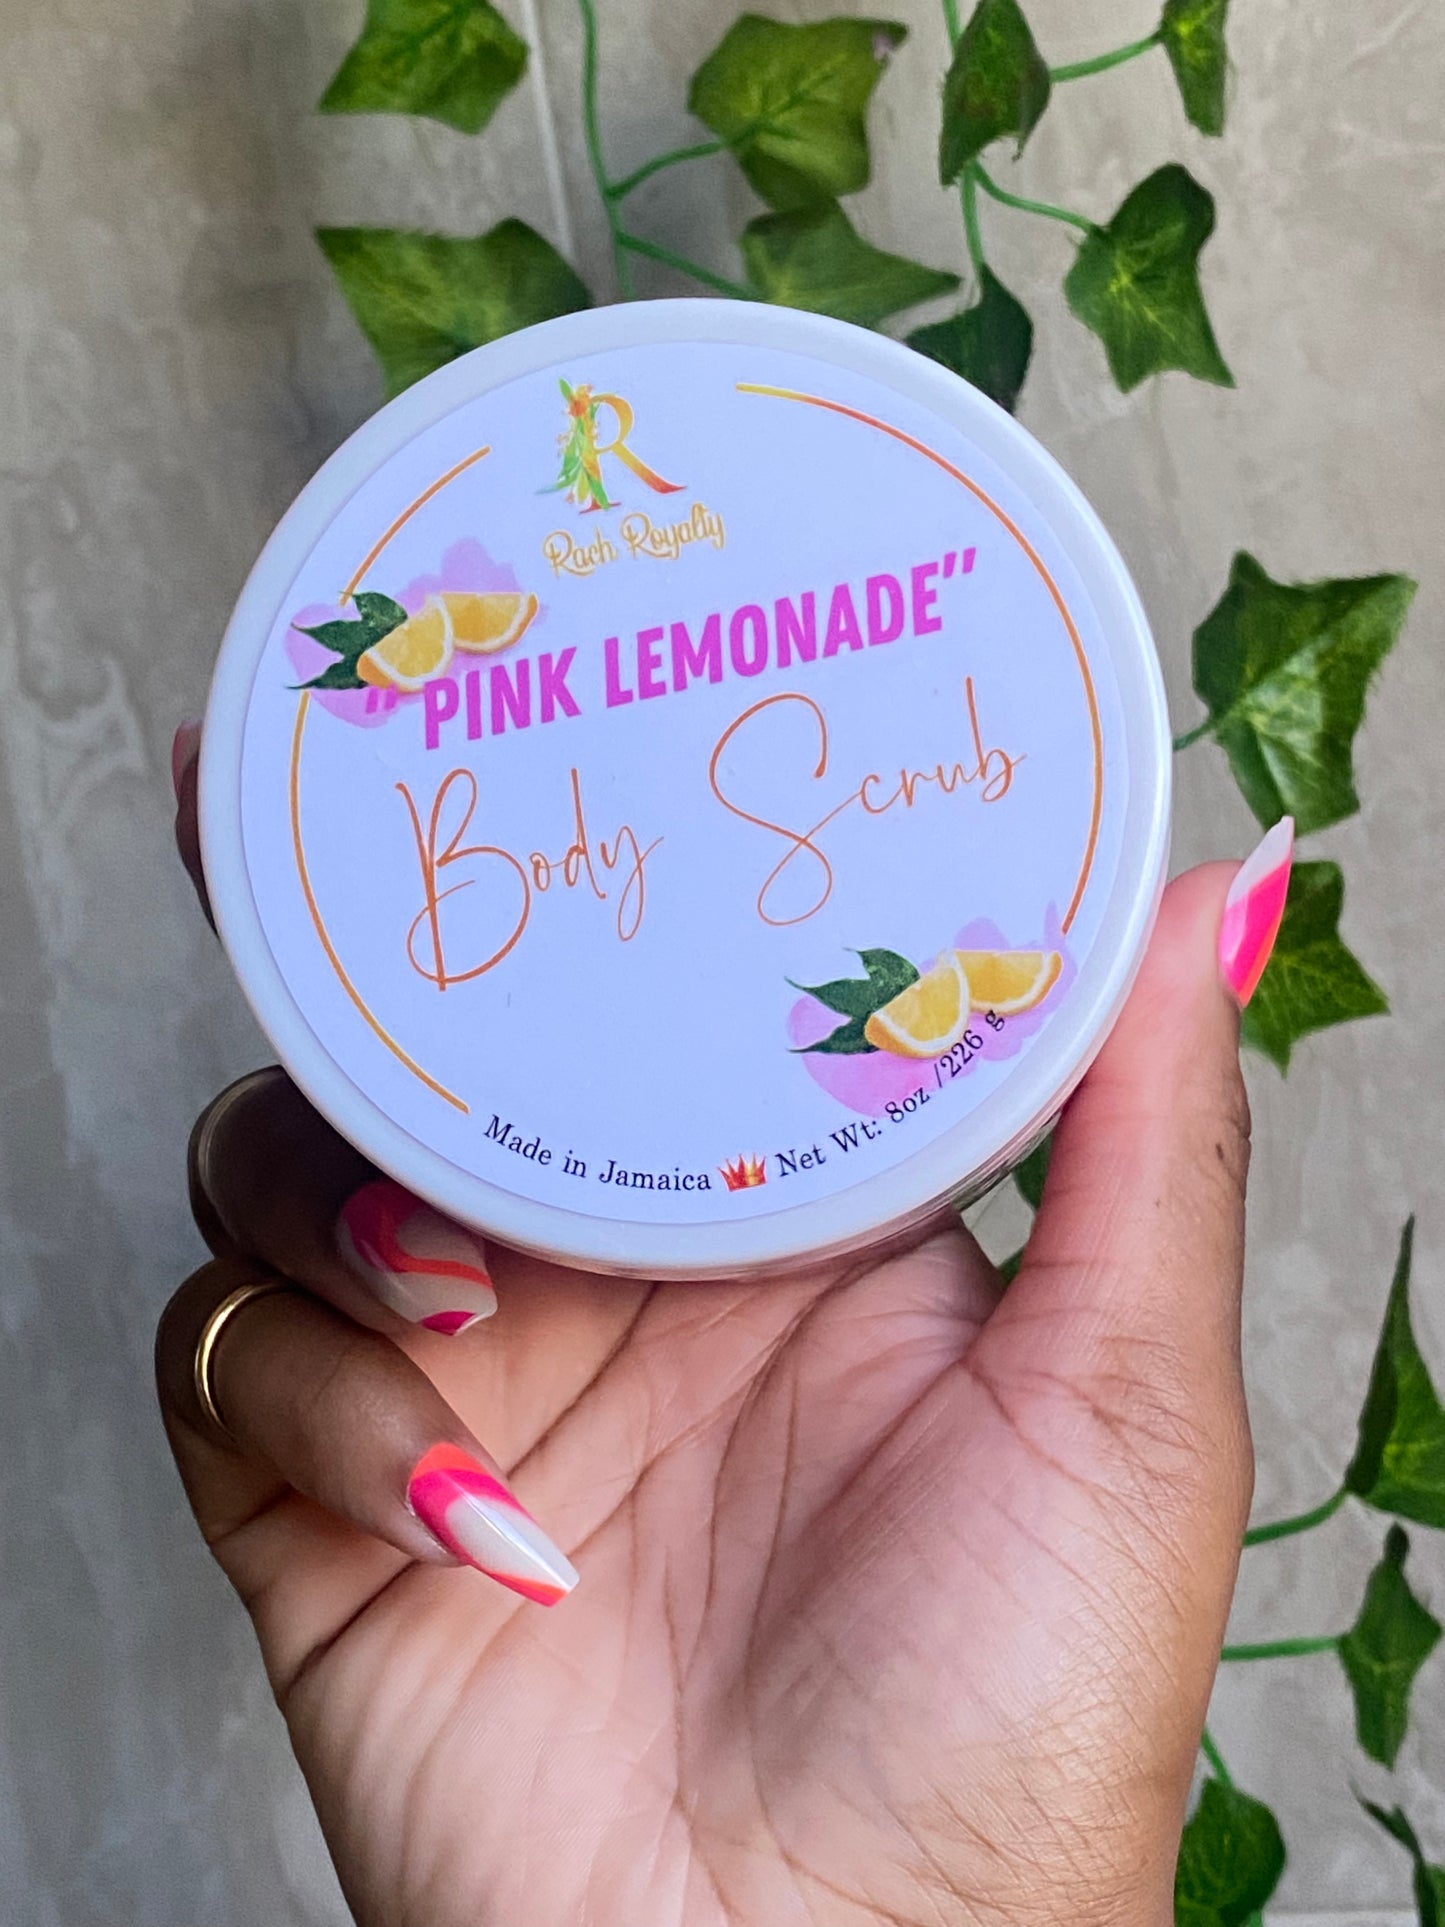 Body Scrub - “Pink Lemonade”